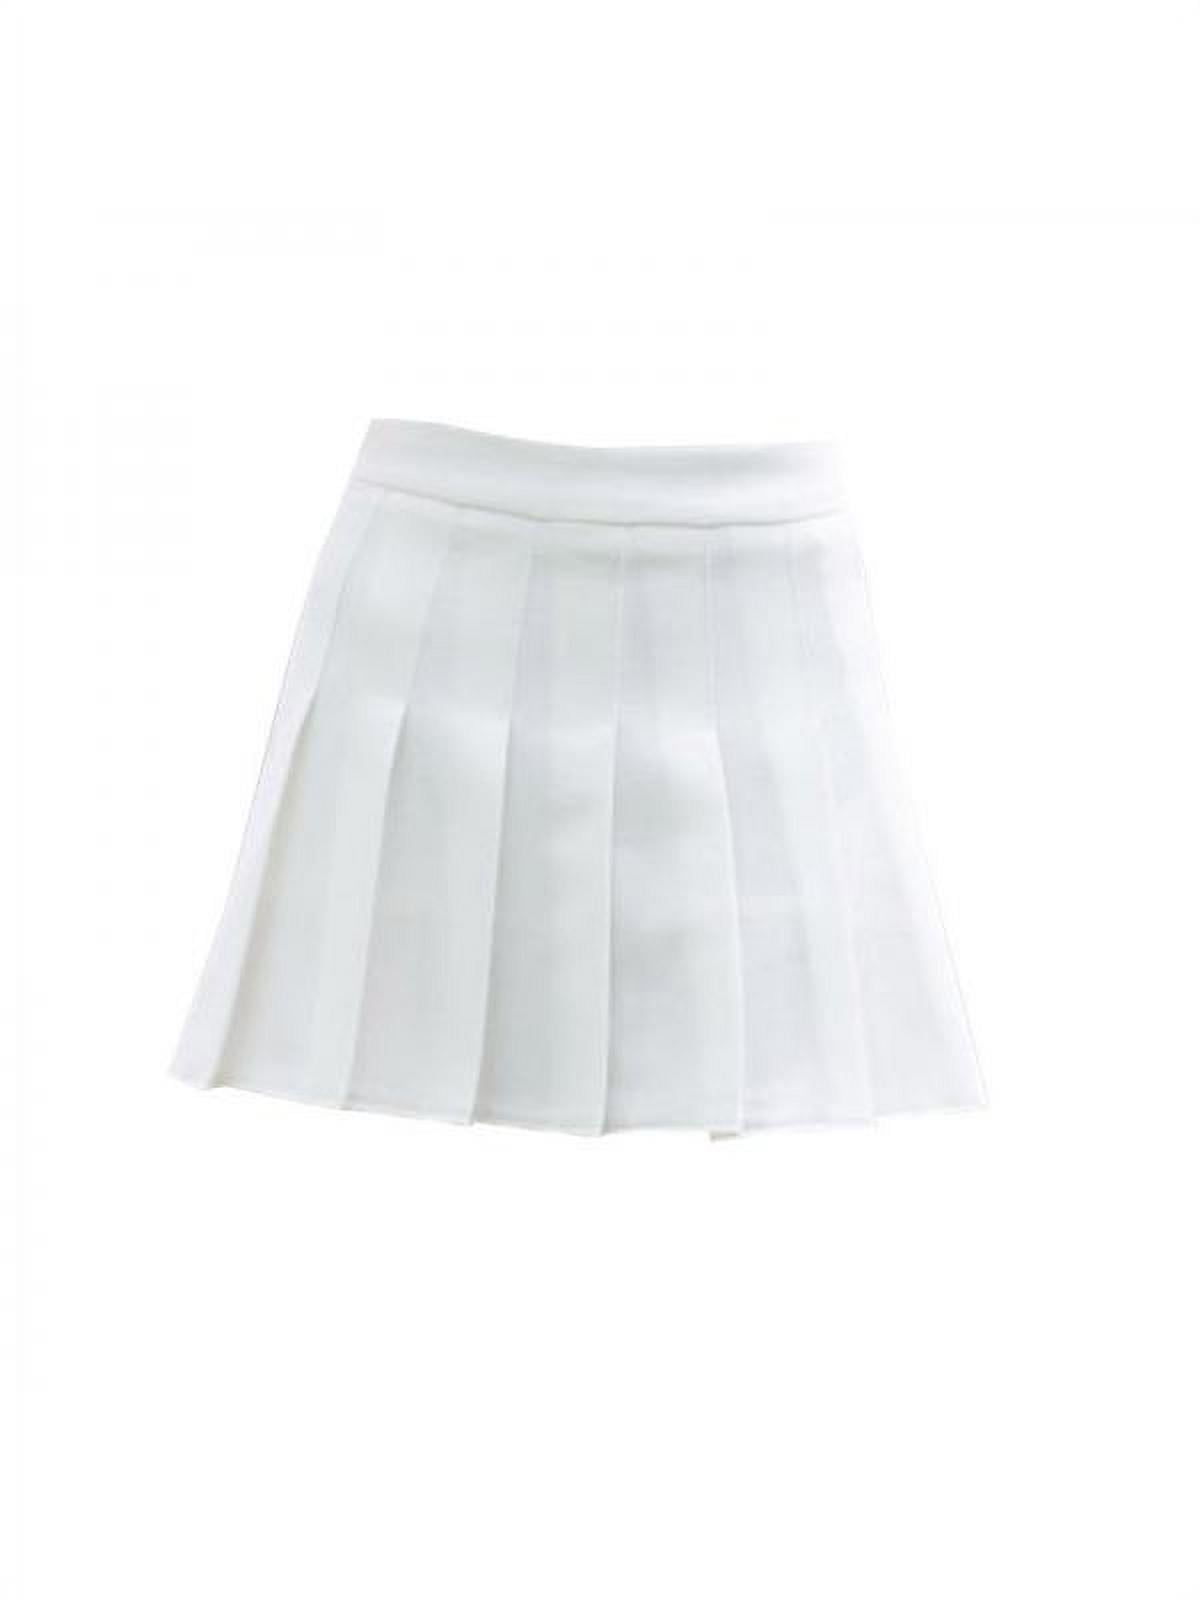 Yasmine Monochrome Floral Pleated Maxi Skirt - Off White